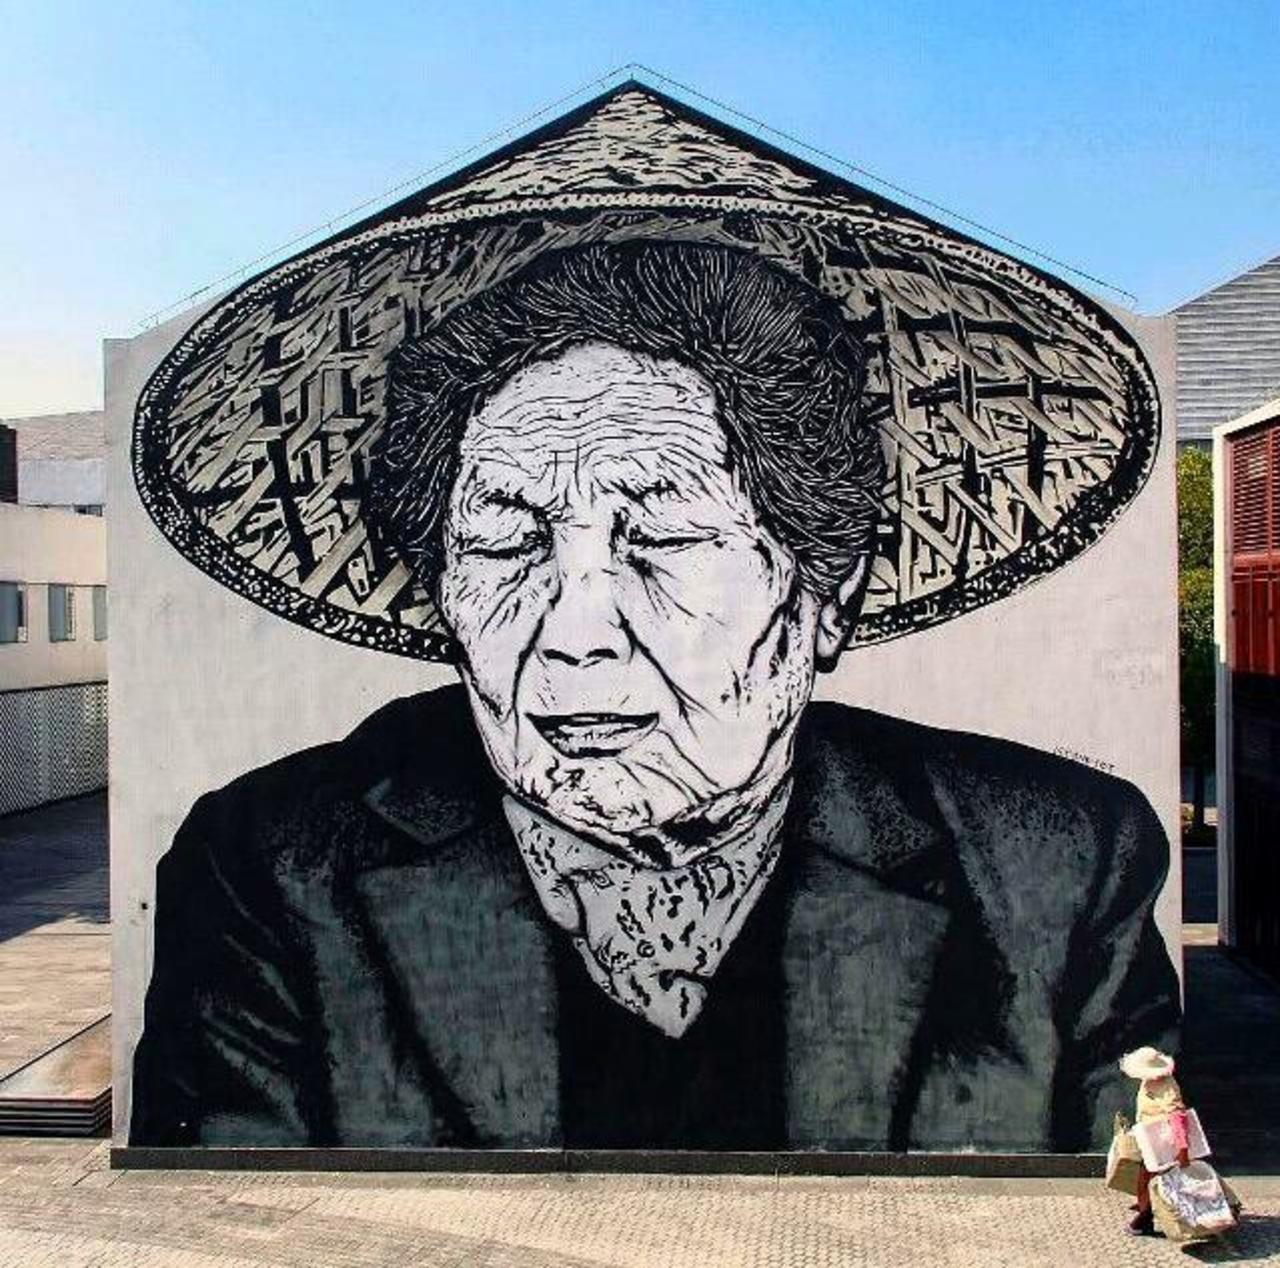 RT belilac "RT belilac "RT belilac "New Street Art by icy&sot in Shanghai  

#art #graffiti #mural #streetart http://t.co/X6HQHn92ua"""